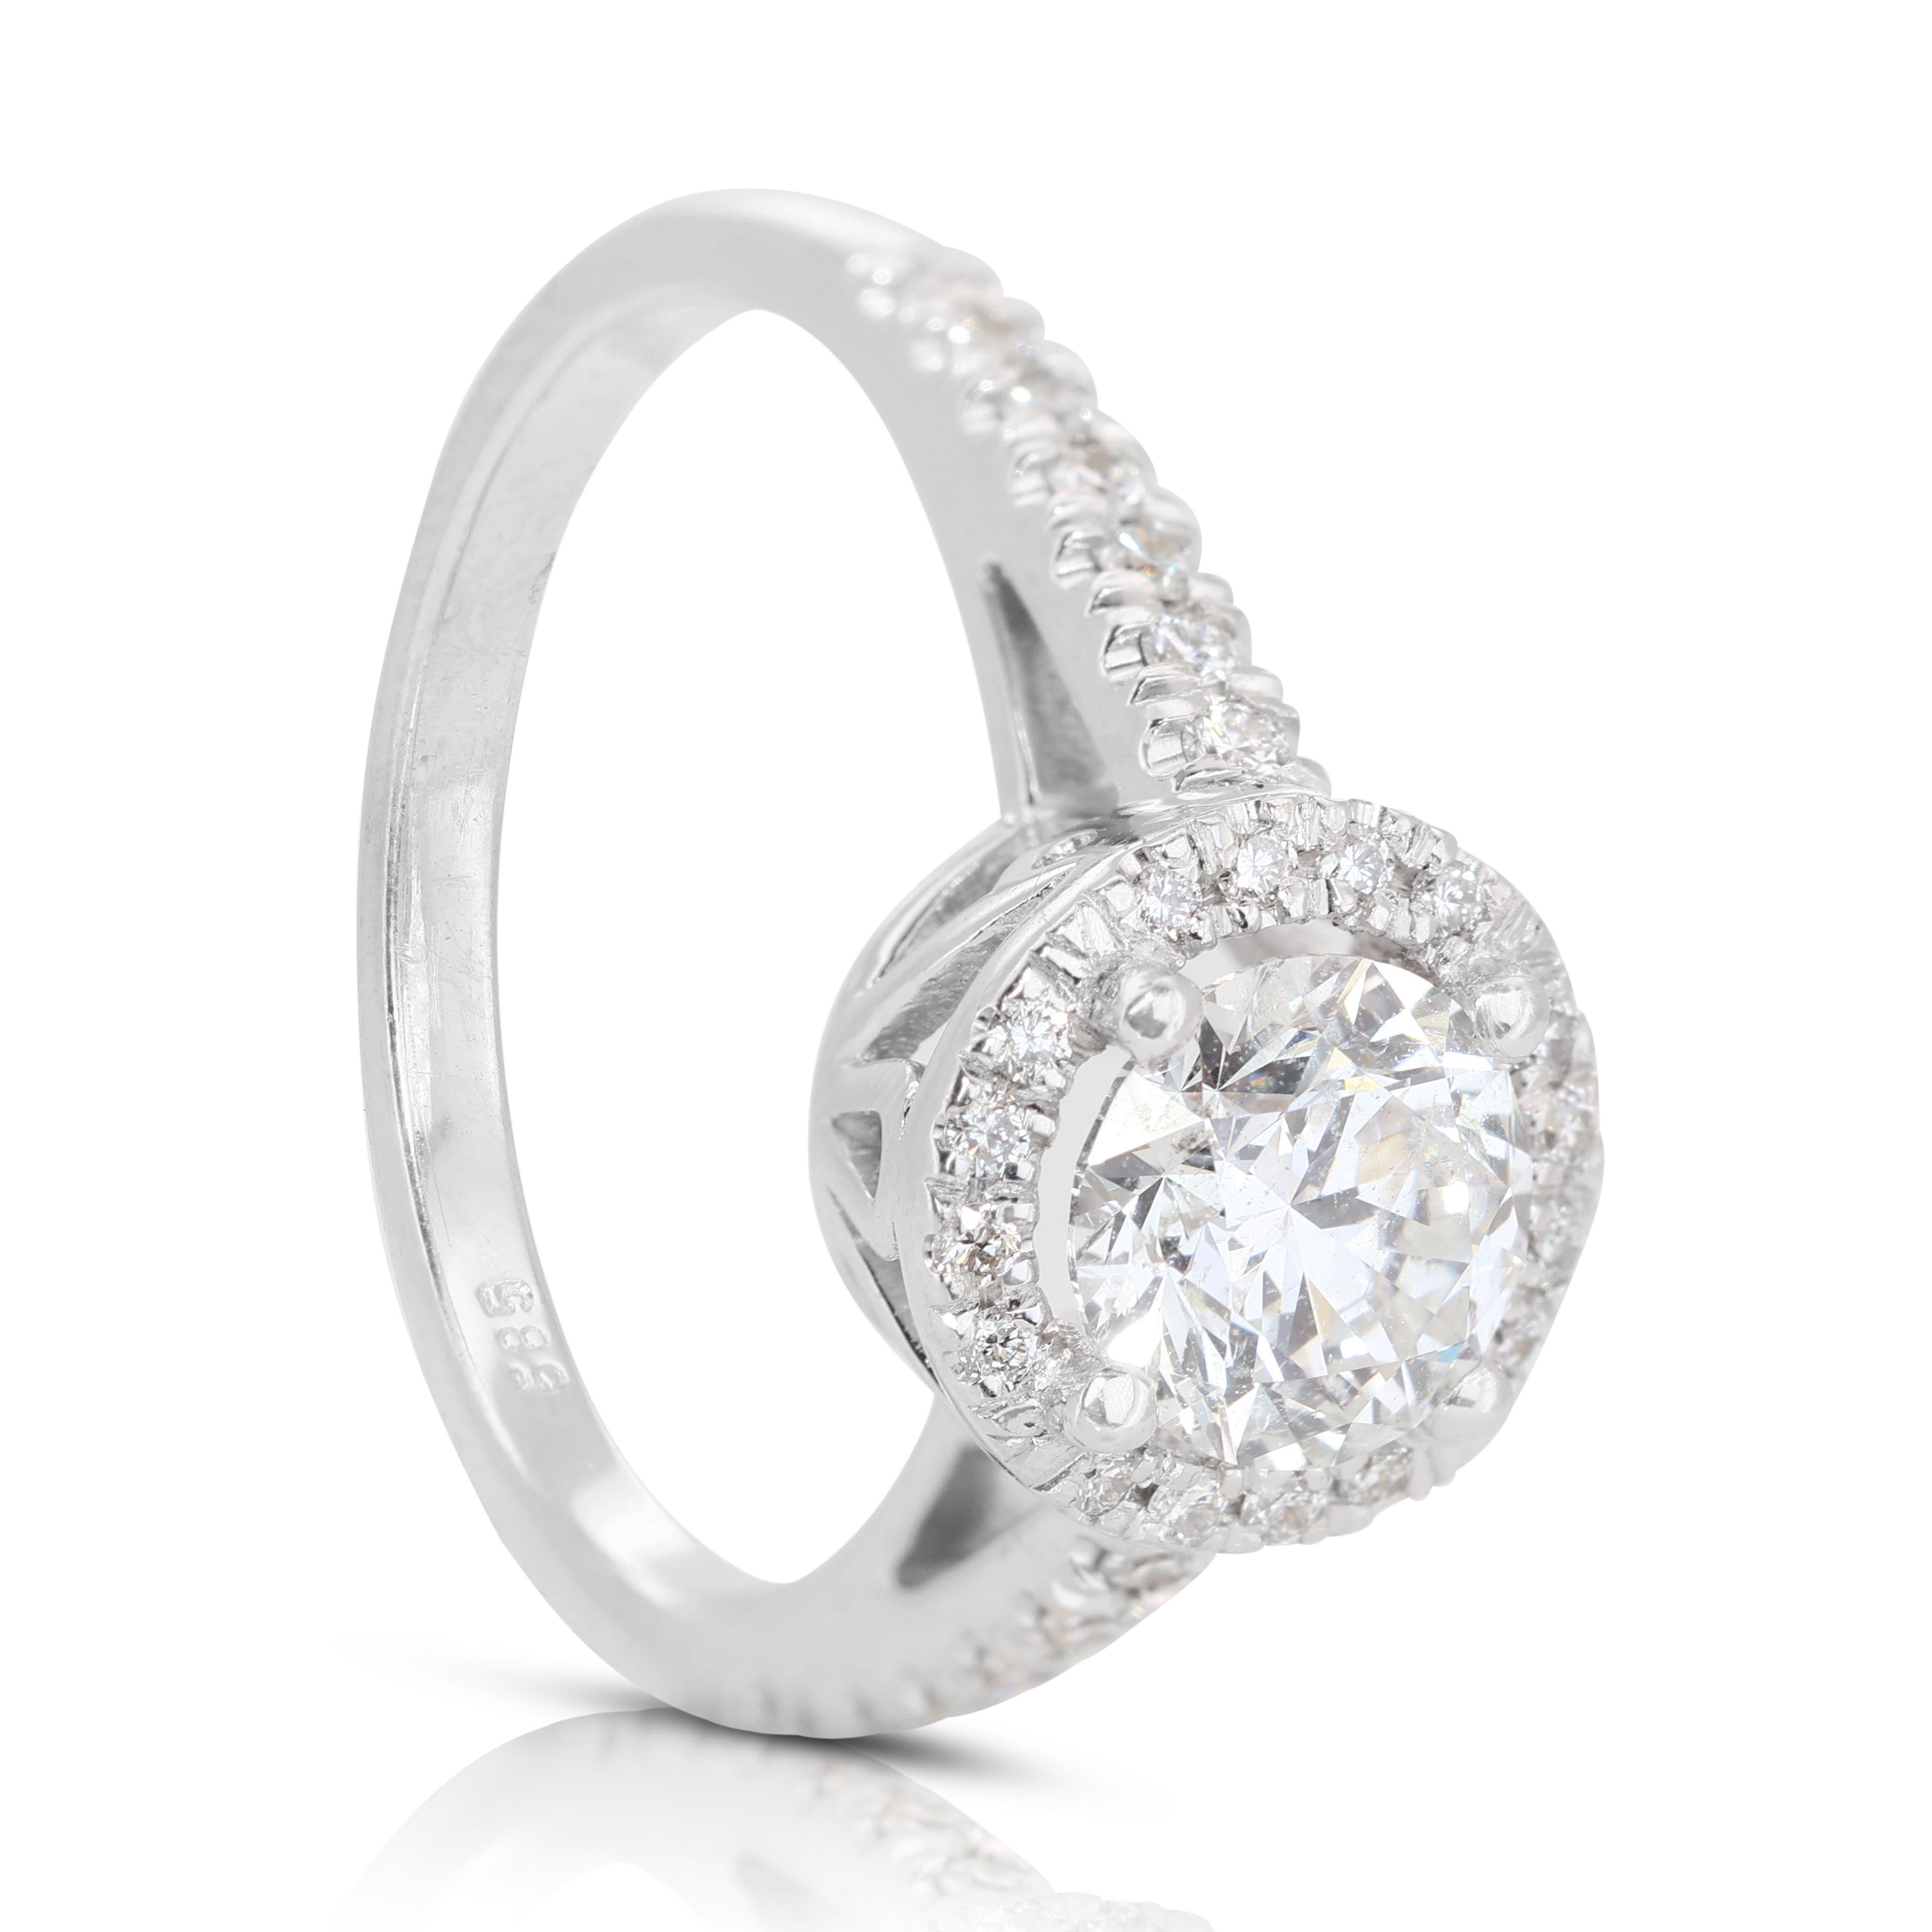 Dazzling 0.70ct Pave Halo Diamond Ring set in 14K White Gold 3